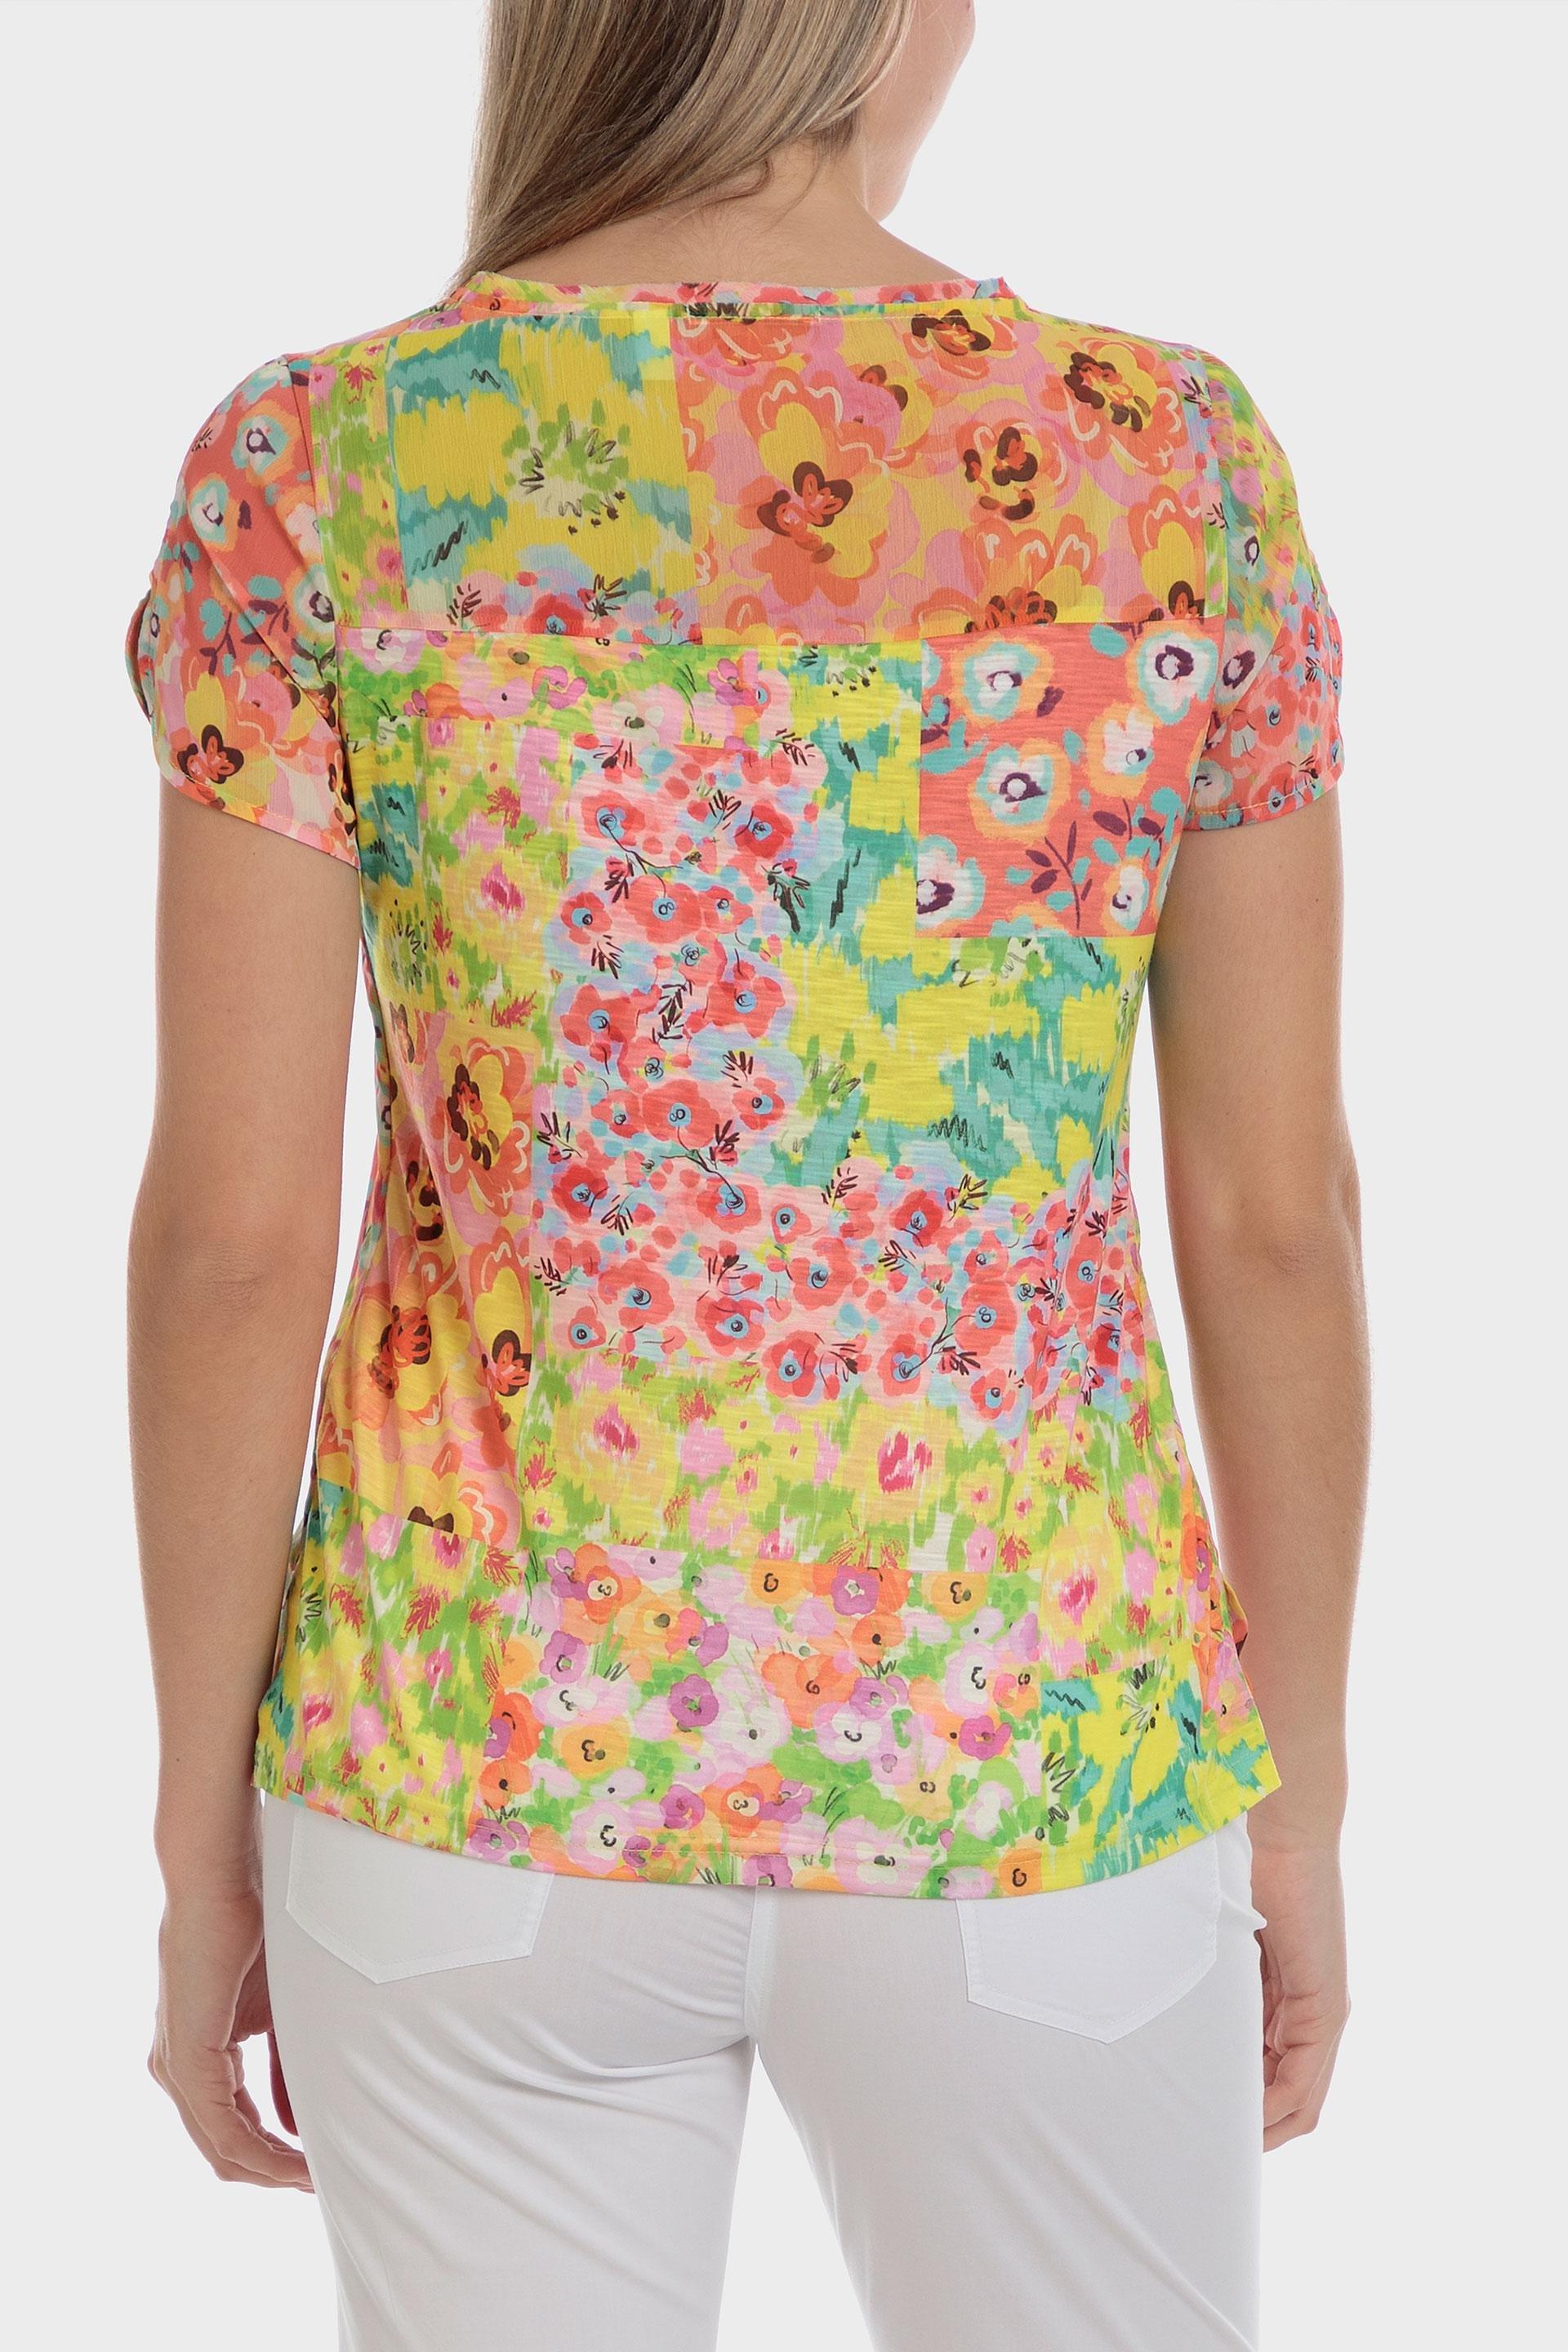 Punt Roma - Multicolour Short Sleeve T-Shirt